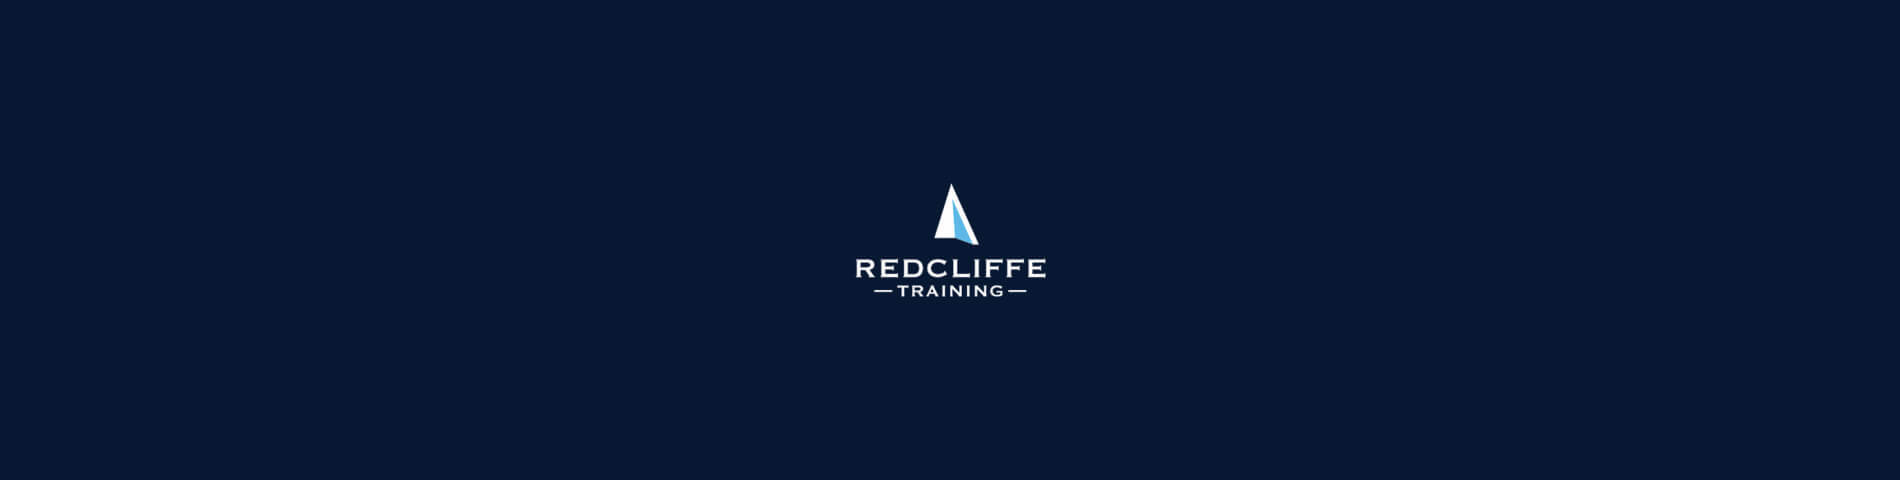 (c) Redcliffetraining.com